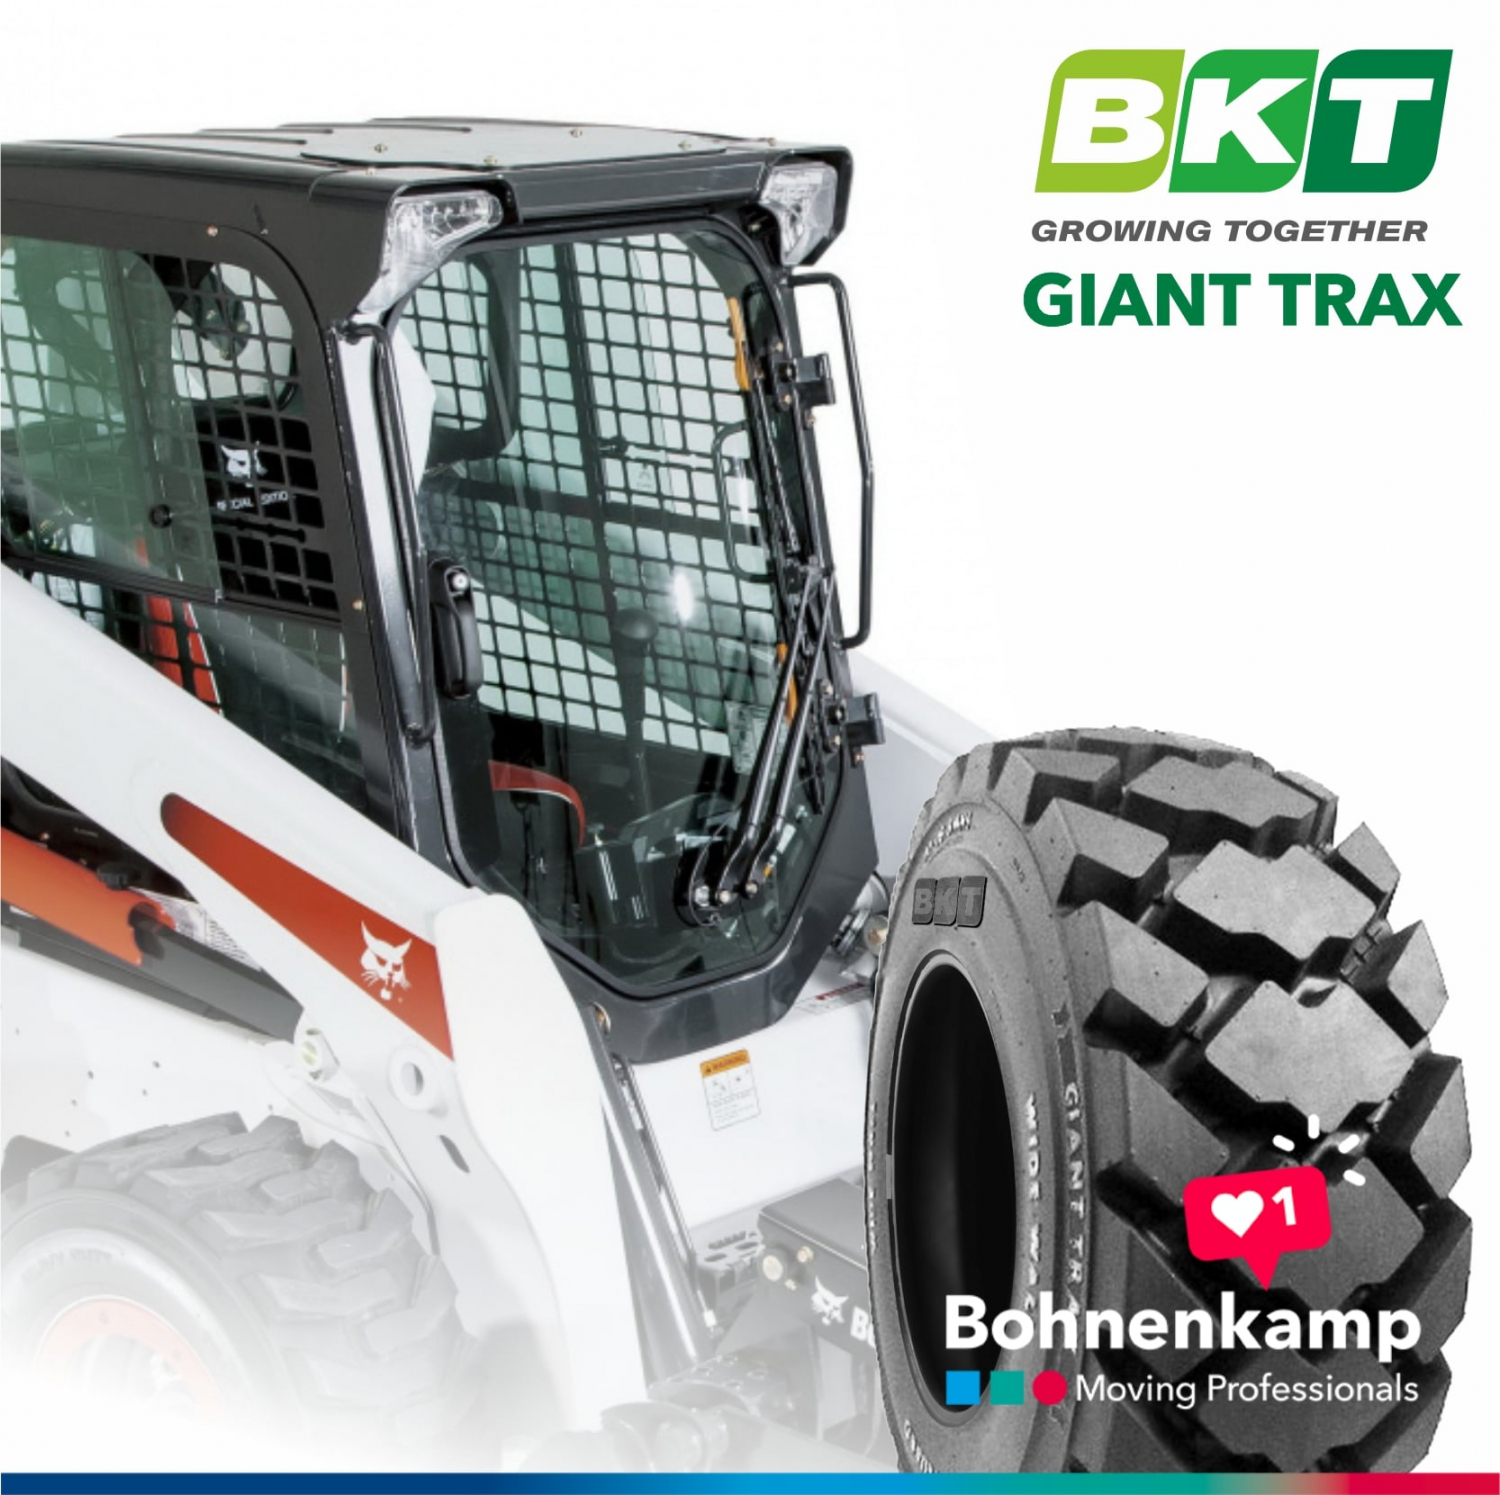 На склады Bohnenkamp поступила долгожданная новинка – шина BKT GIANT TRAX в размере 14-17.5